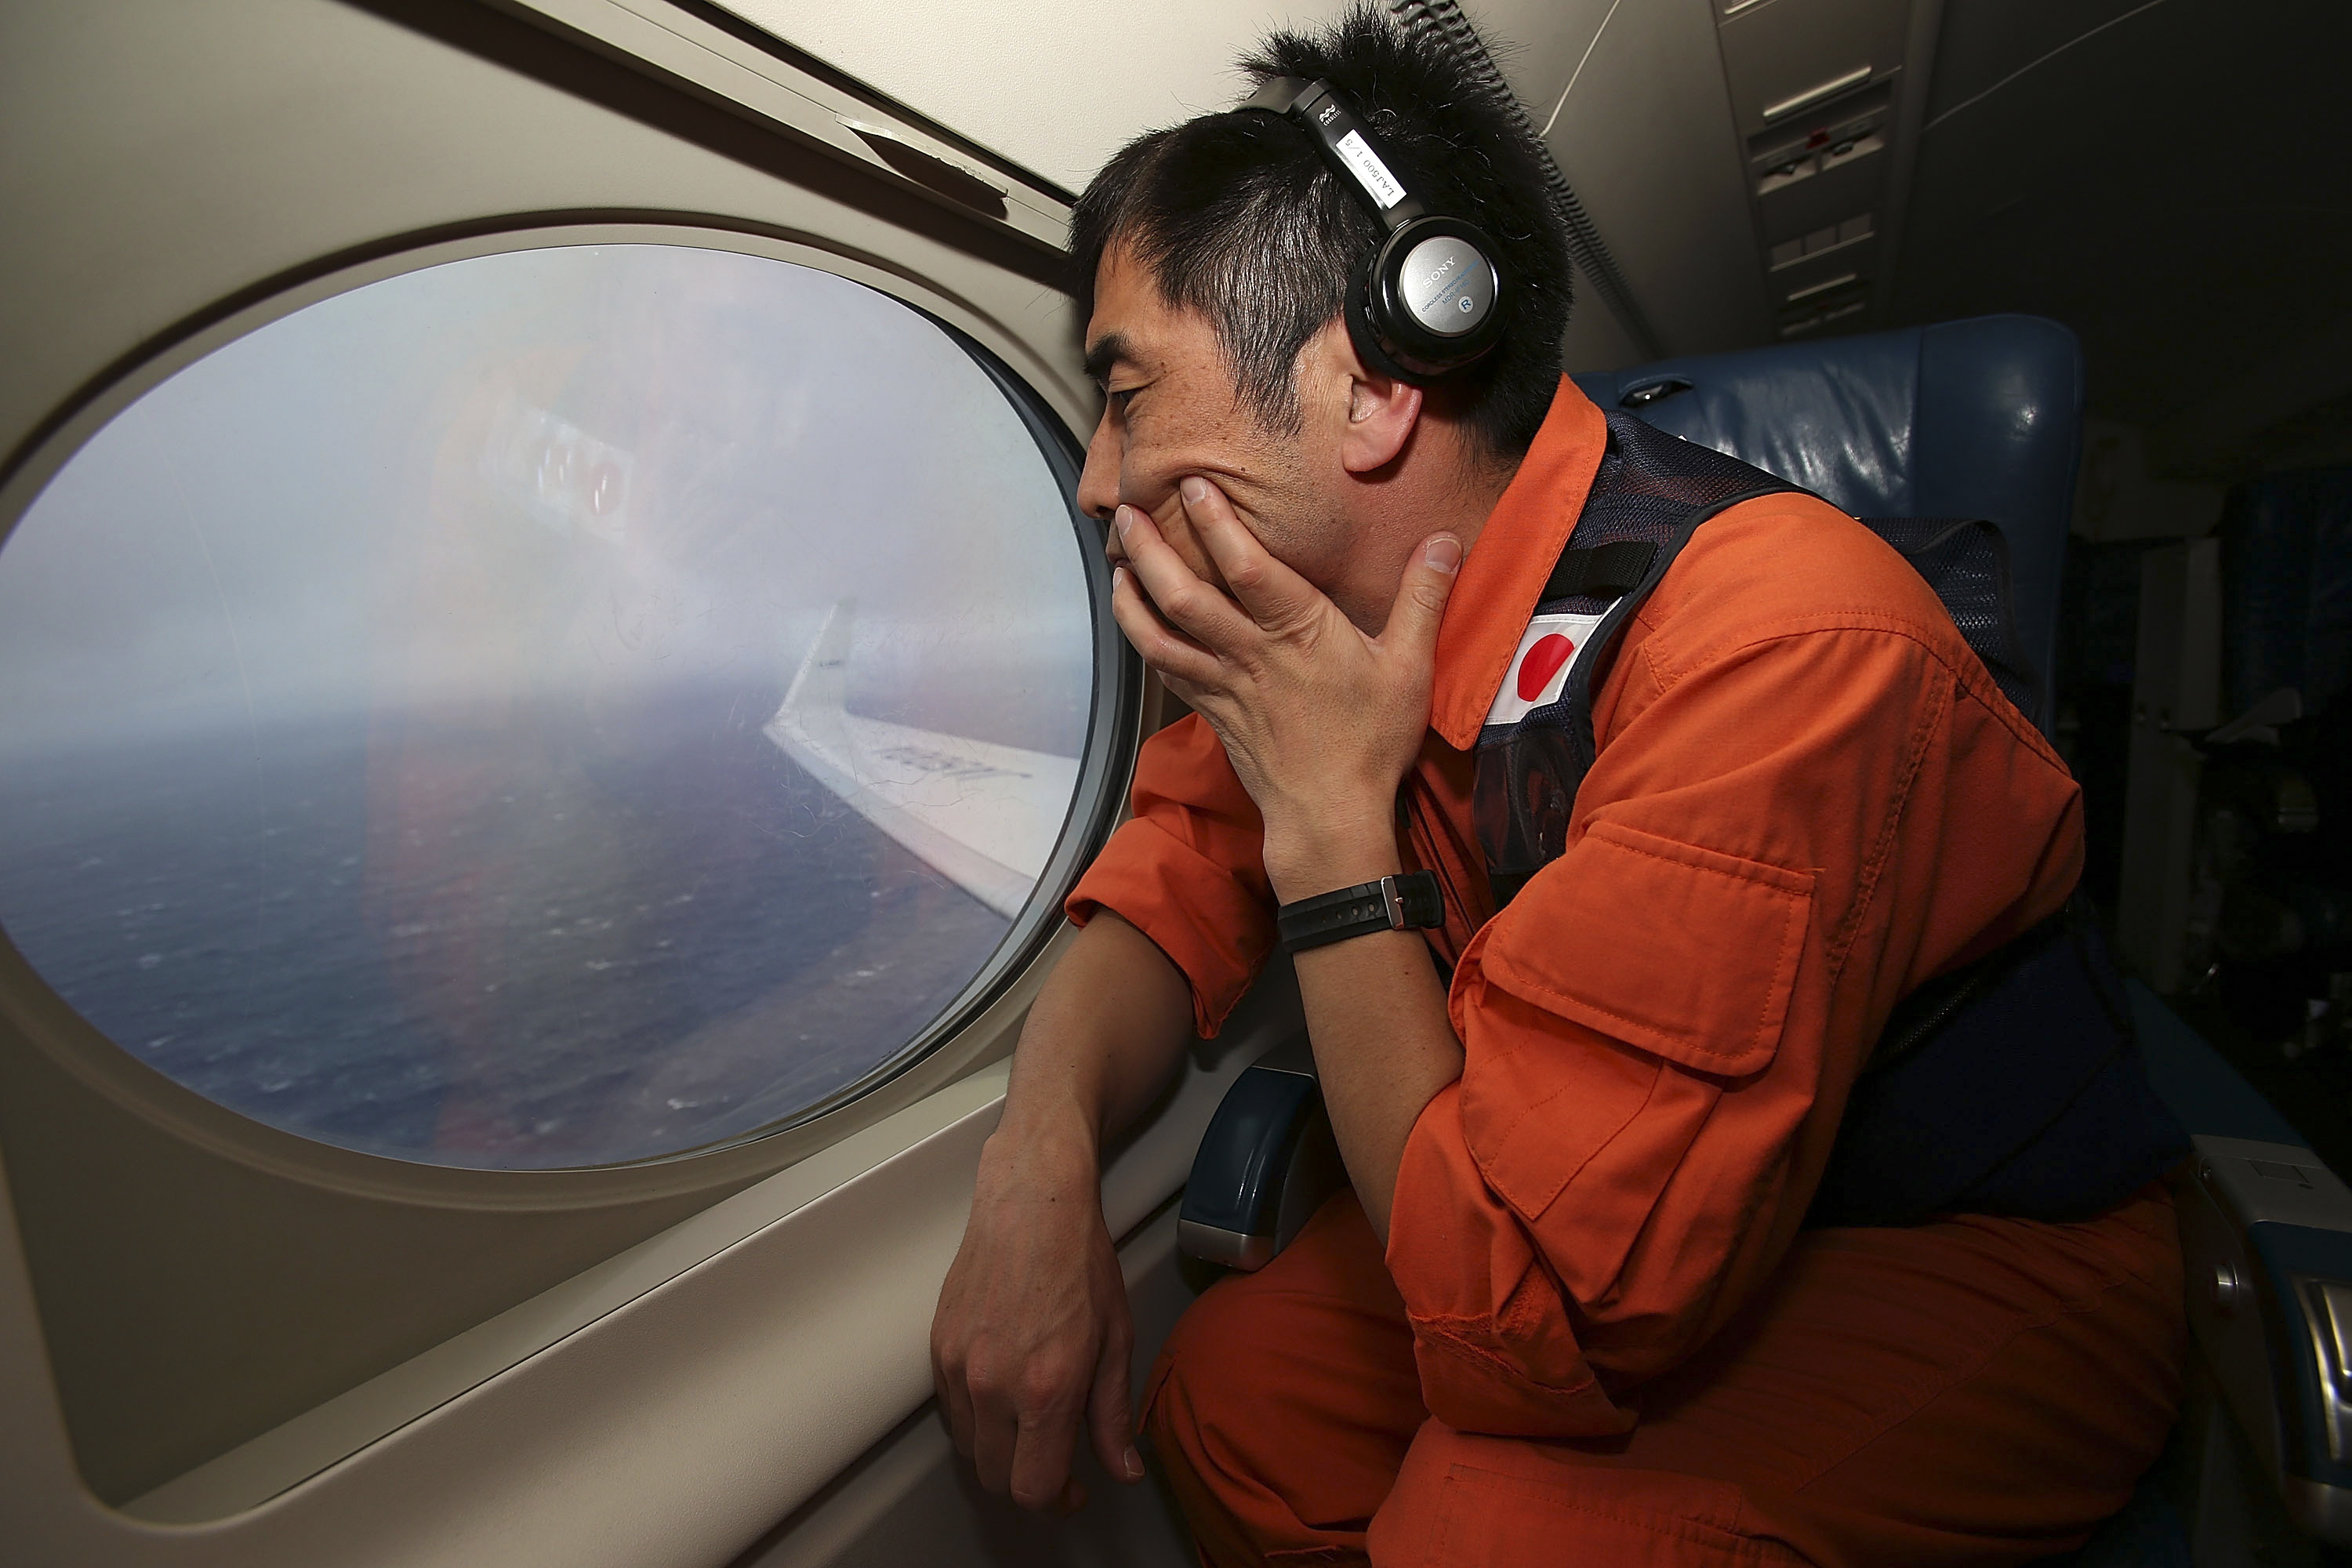 Nατζίμπ Ραζάκ: «Μπορεί να μην λυθεί ποτέ το μυστήριο με το αεροπλάνο»